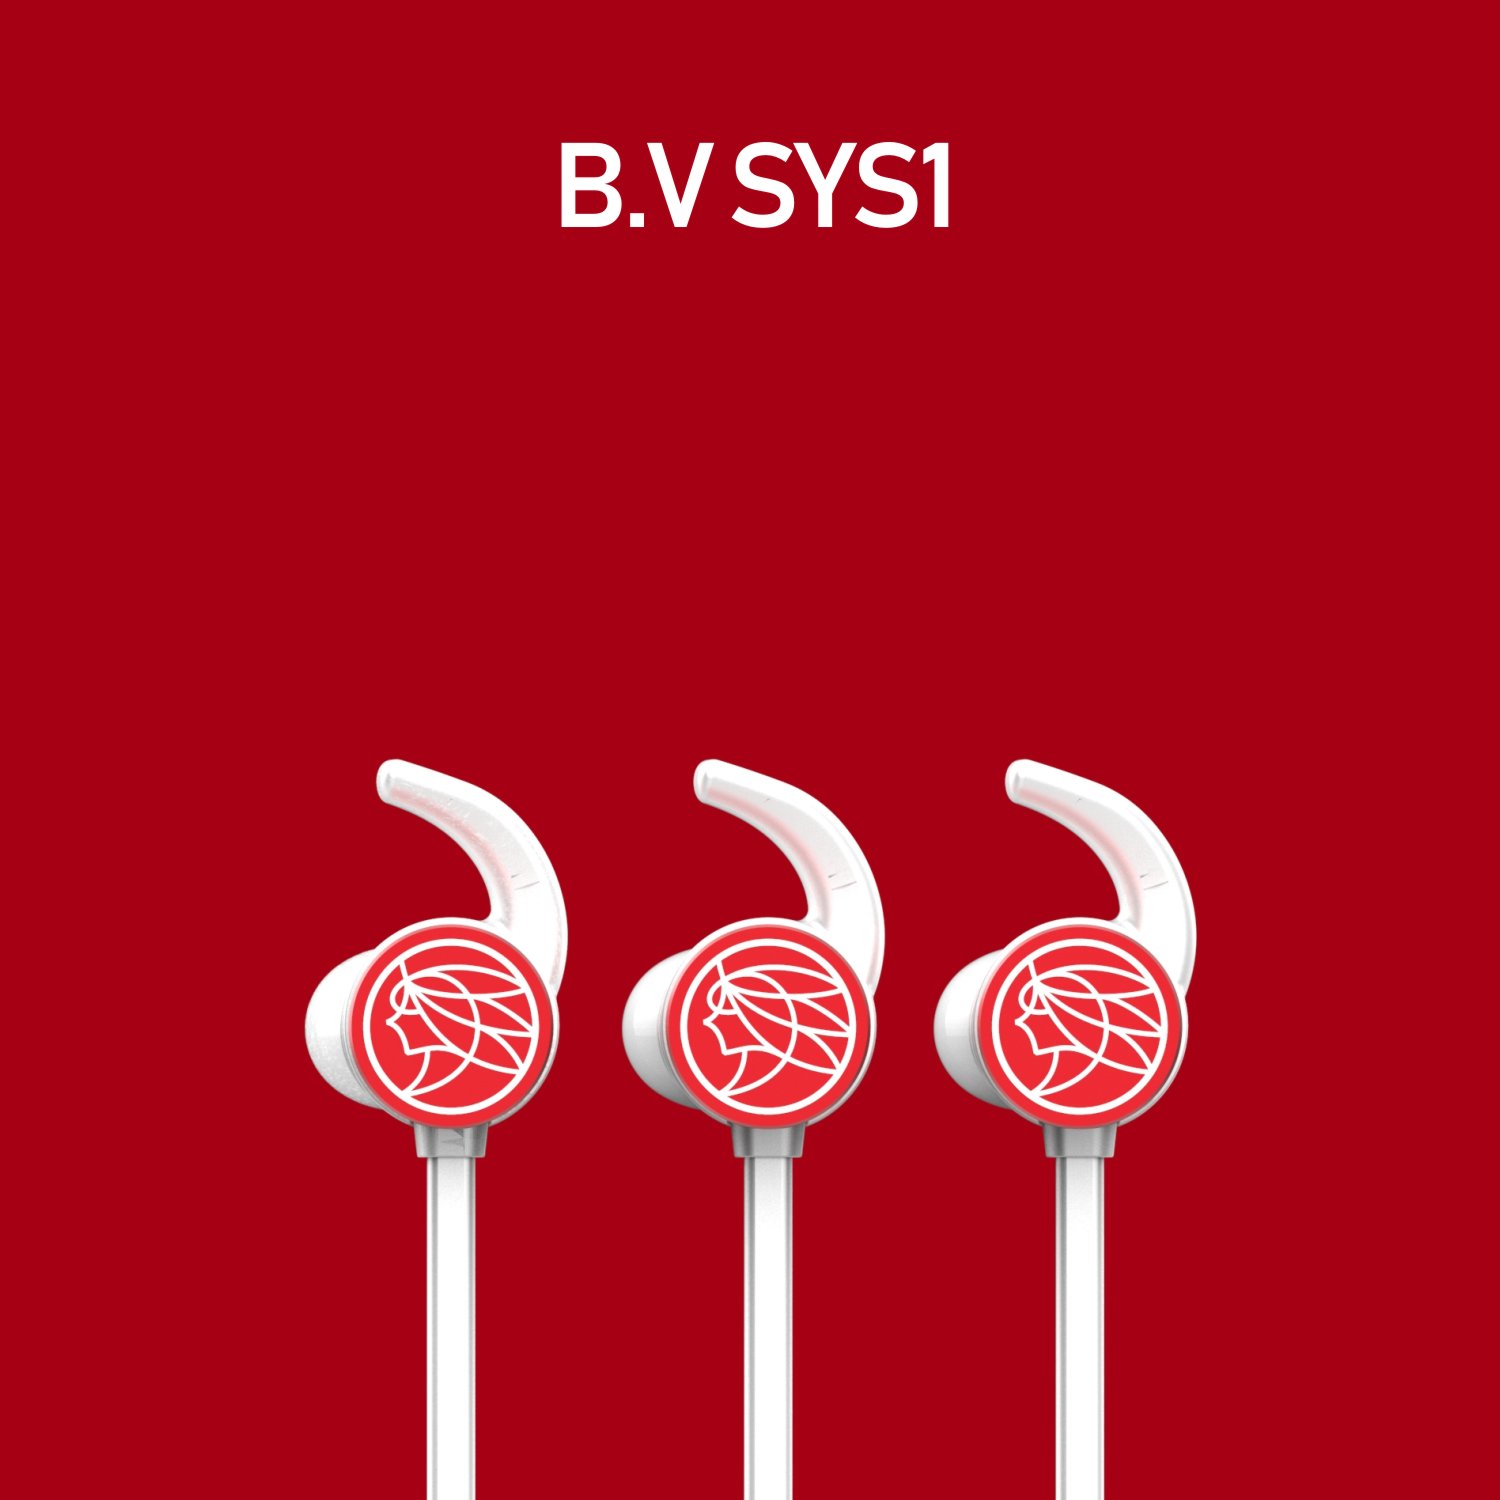 BVSYS1